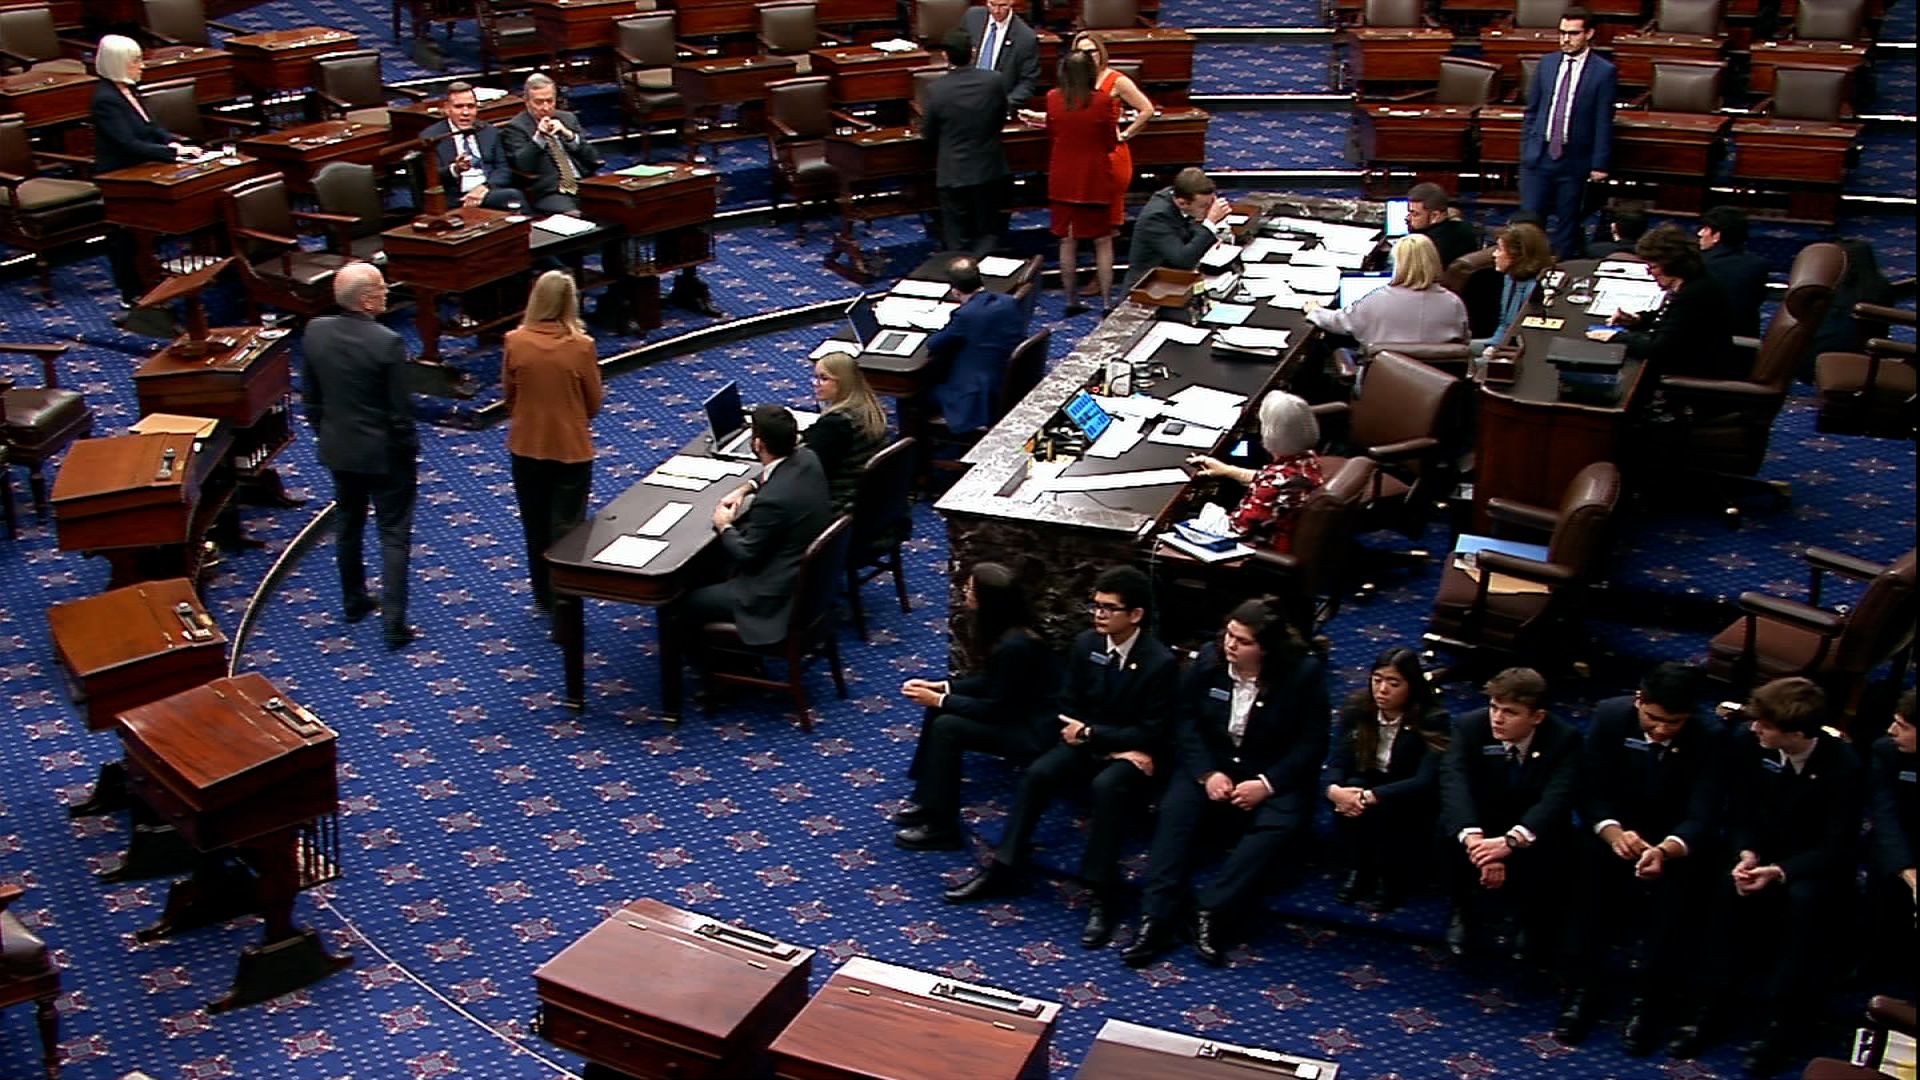 The Senate floor on Wednesday.